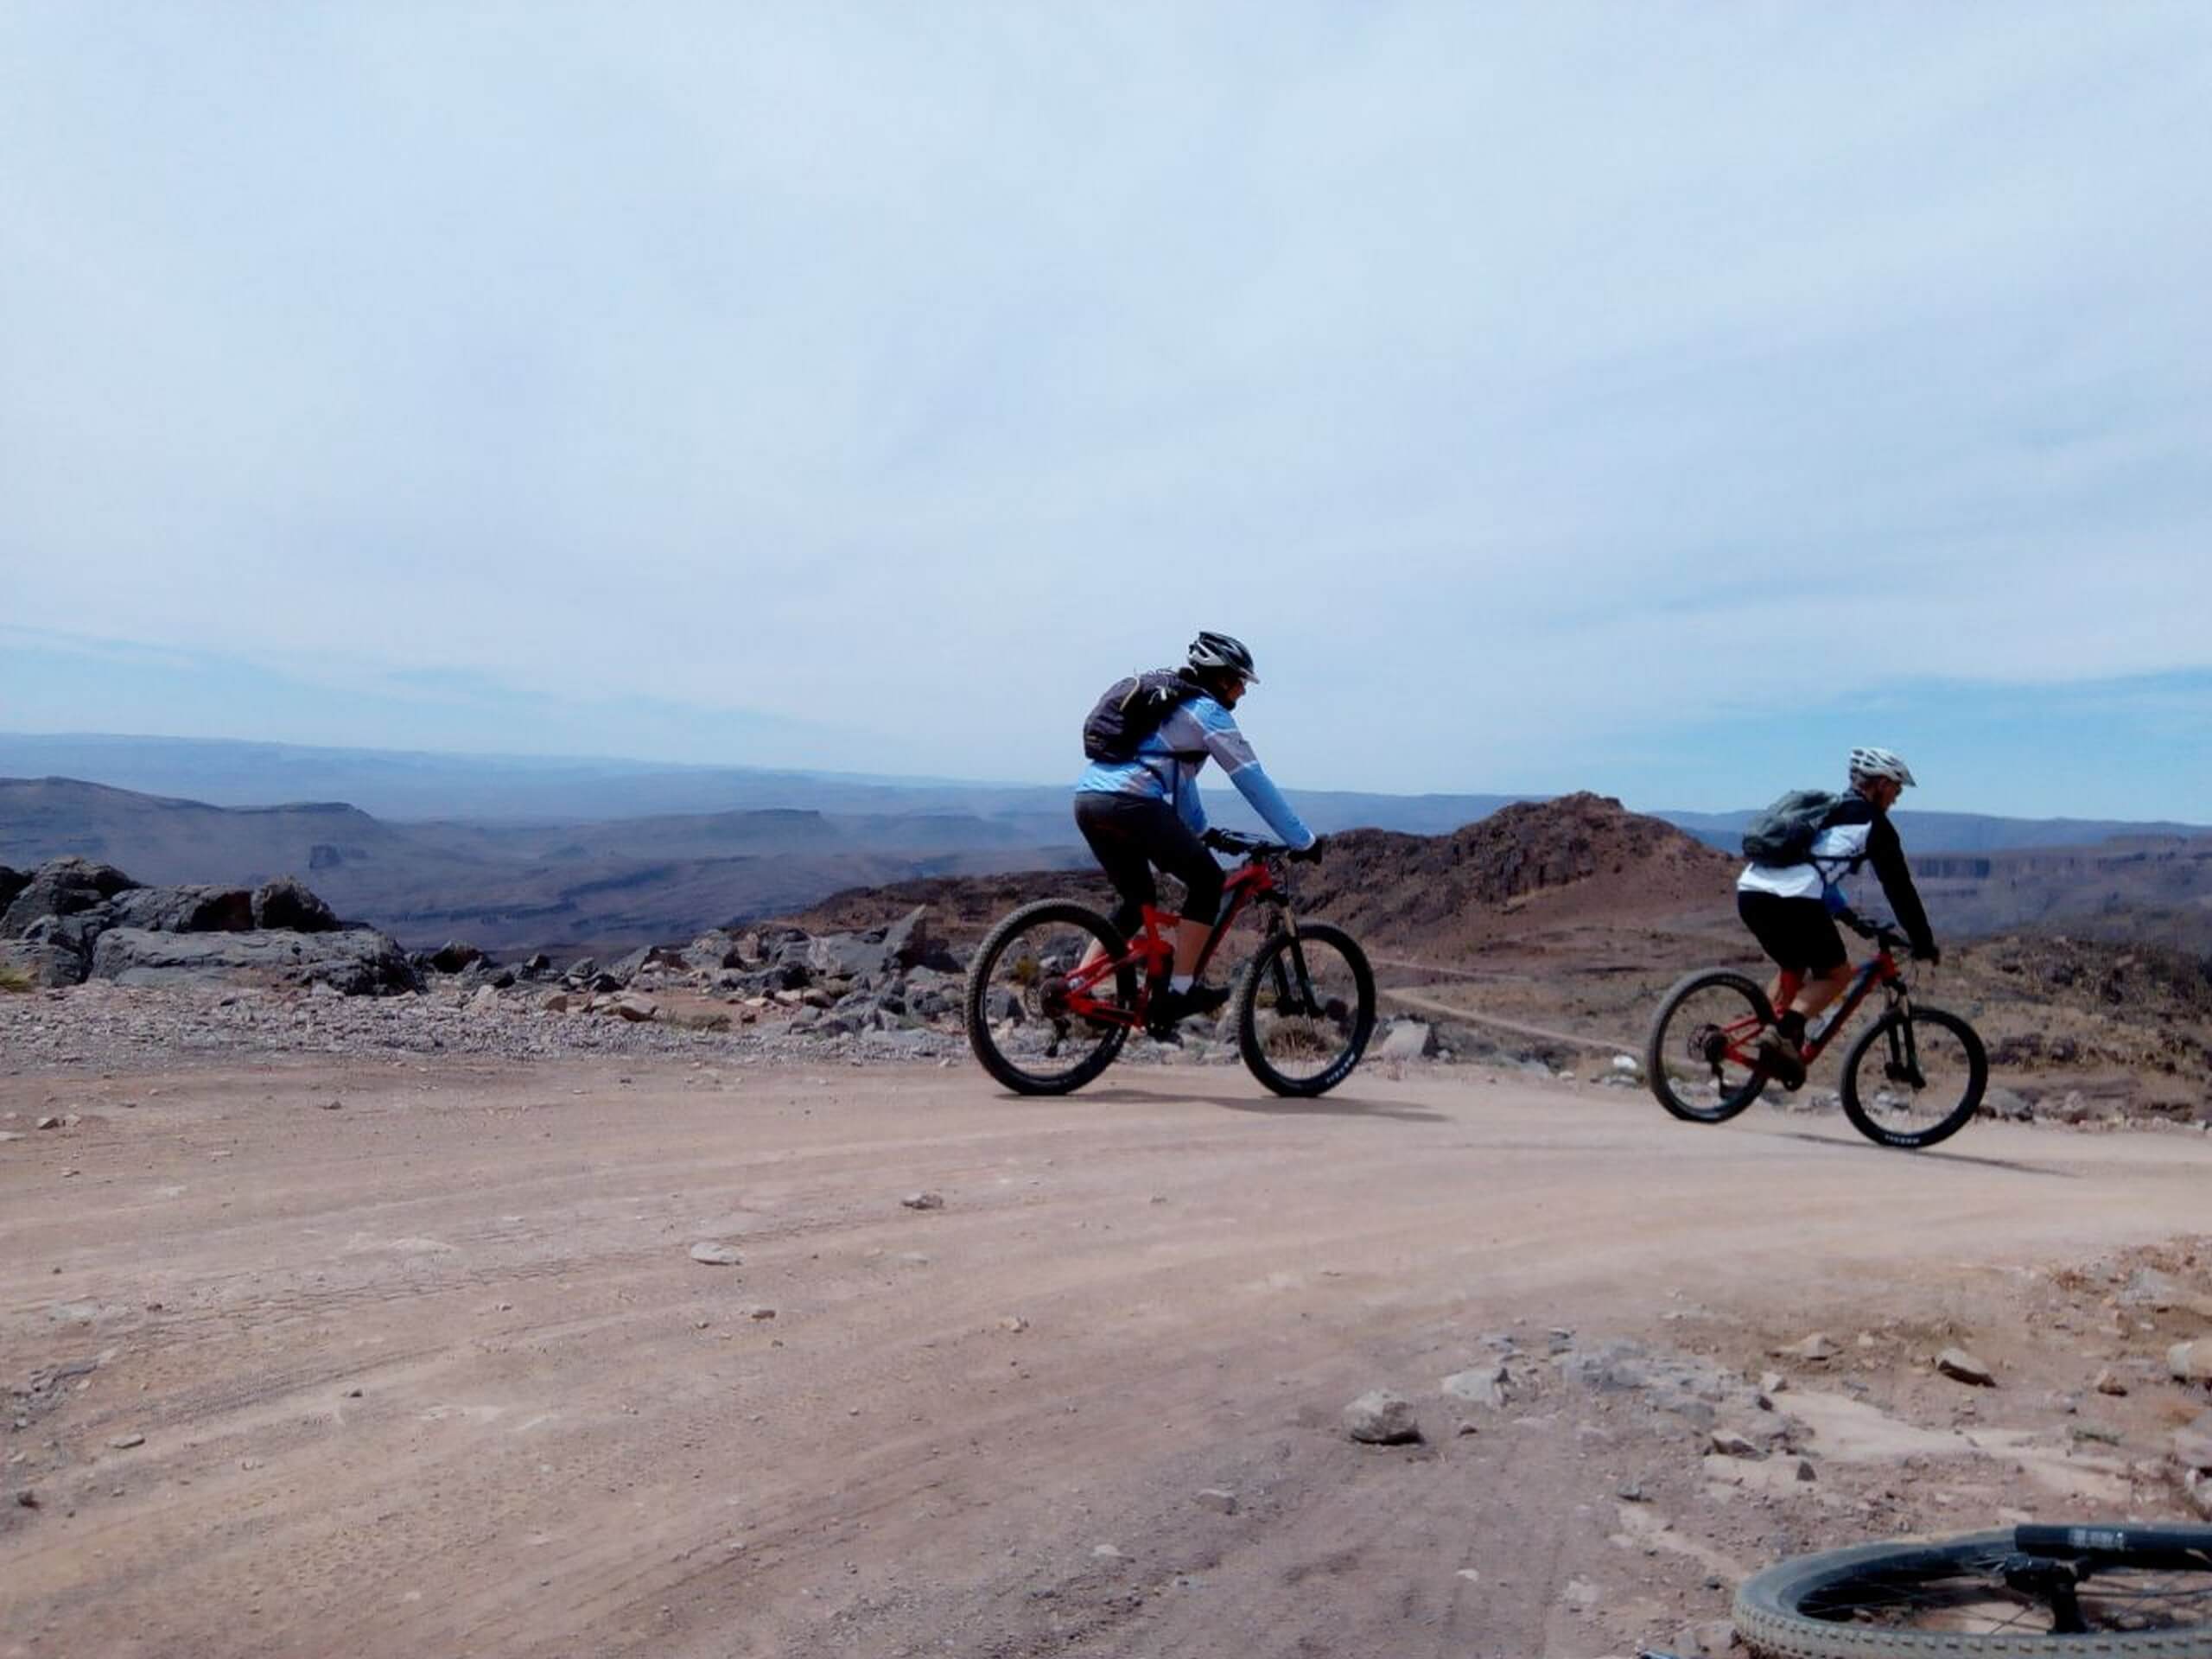 Saghro biking in Morocco